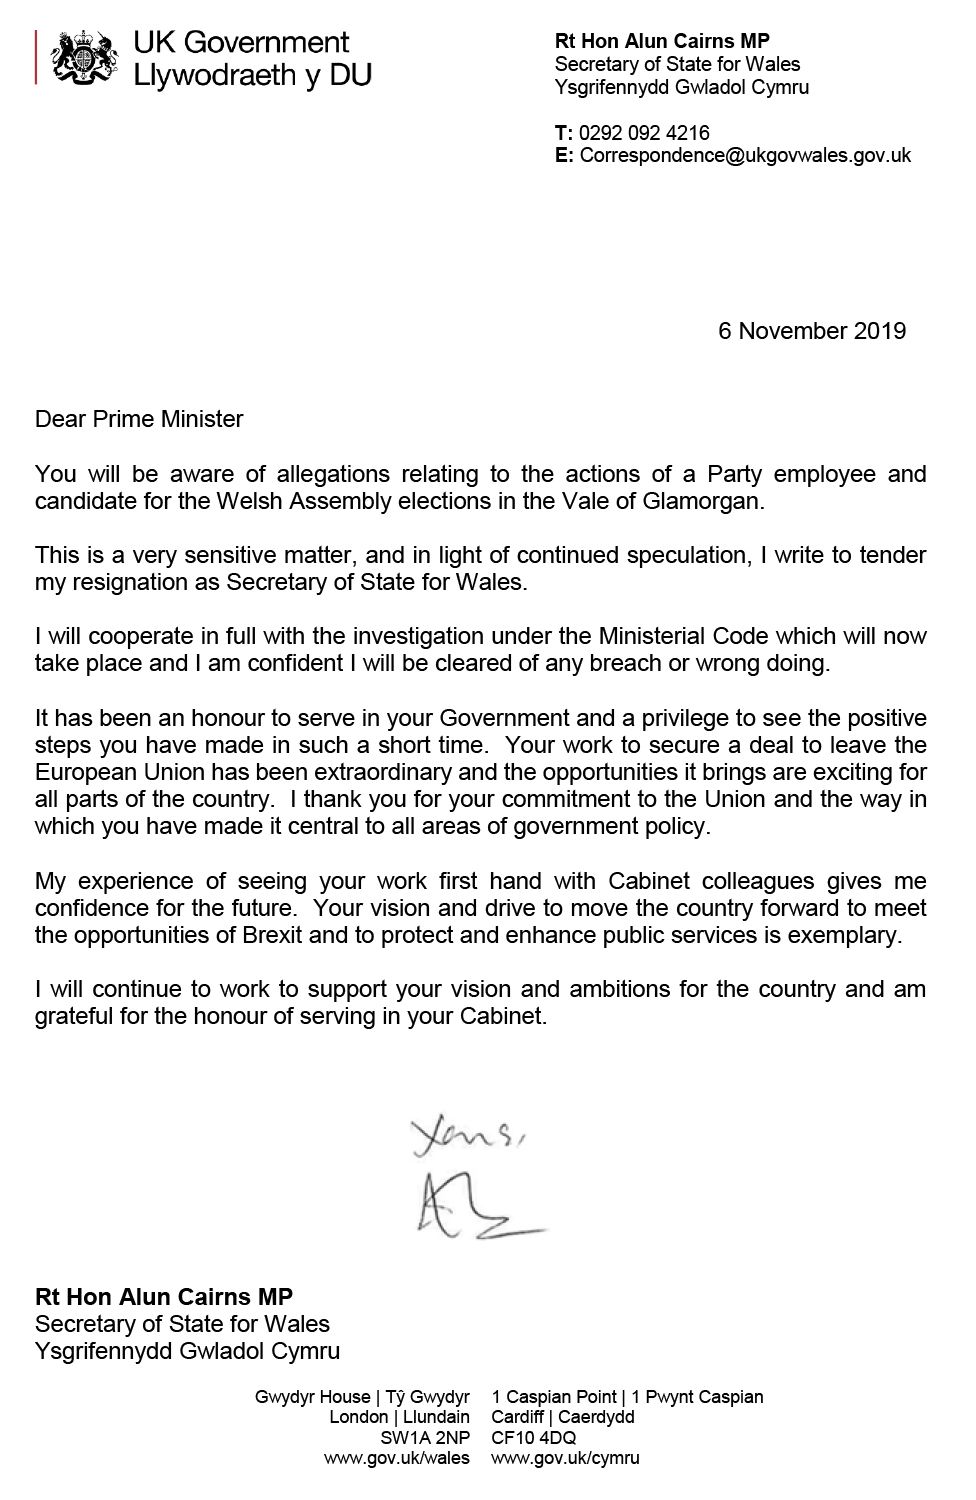 Alun Cairns' resignation letter